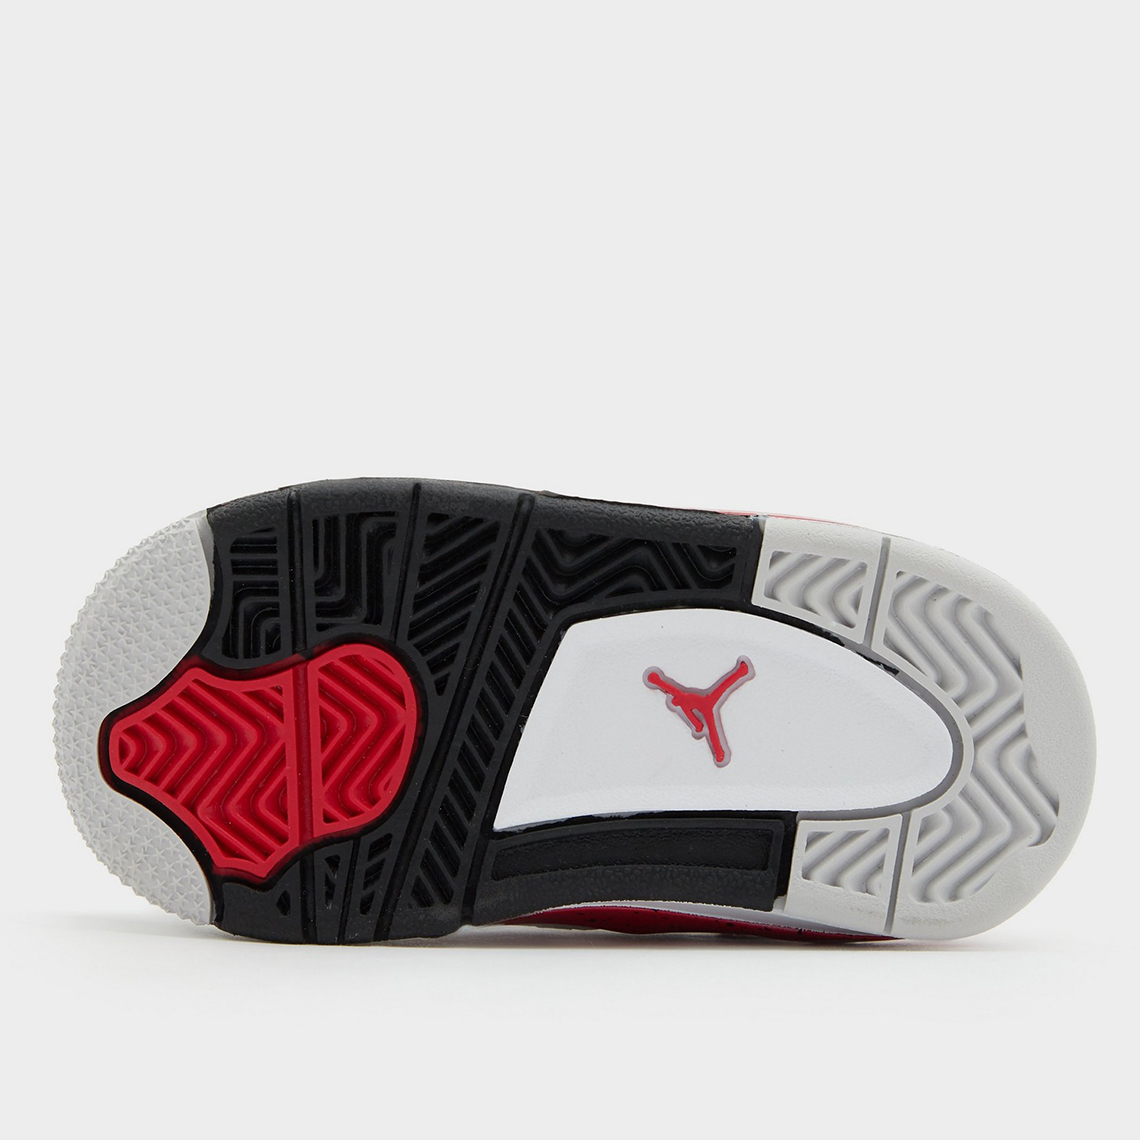 Jordan Retro 4 Bebes Chaussures Td Red Cement Bq7670 161 3